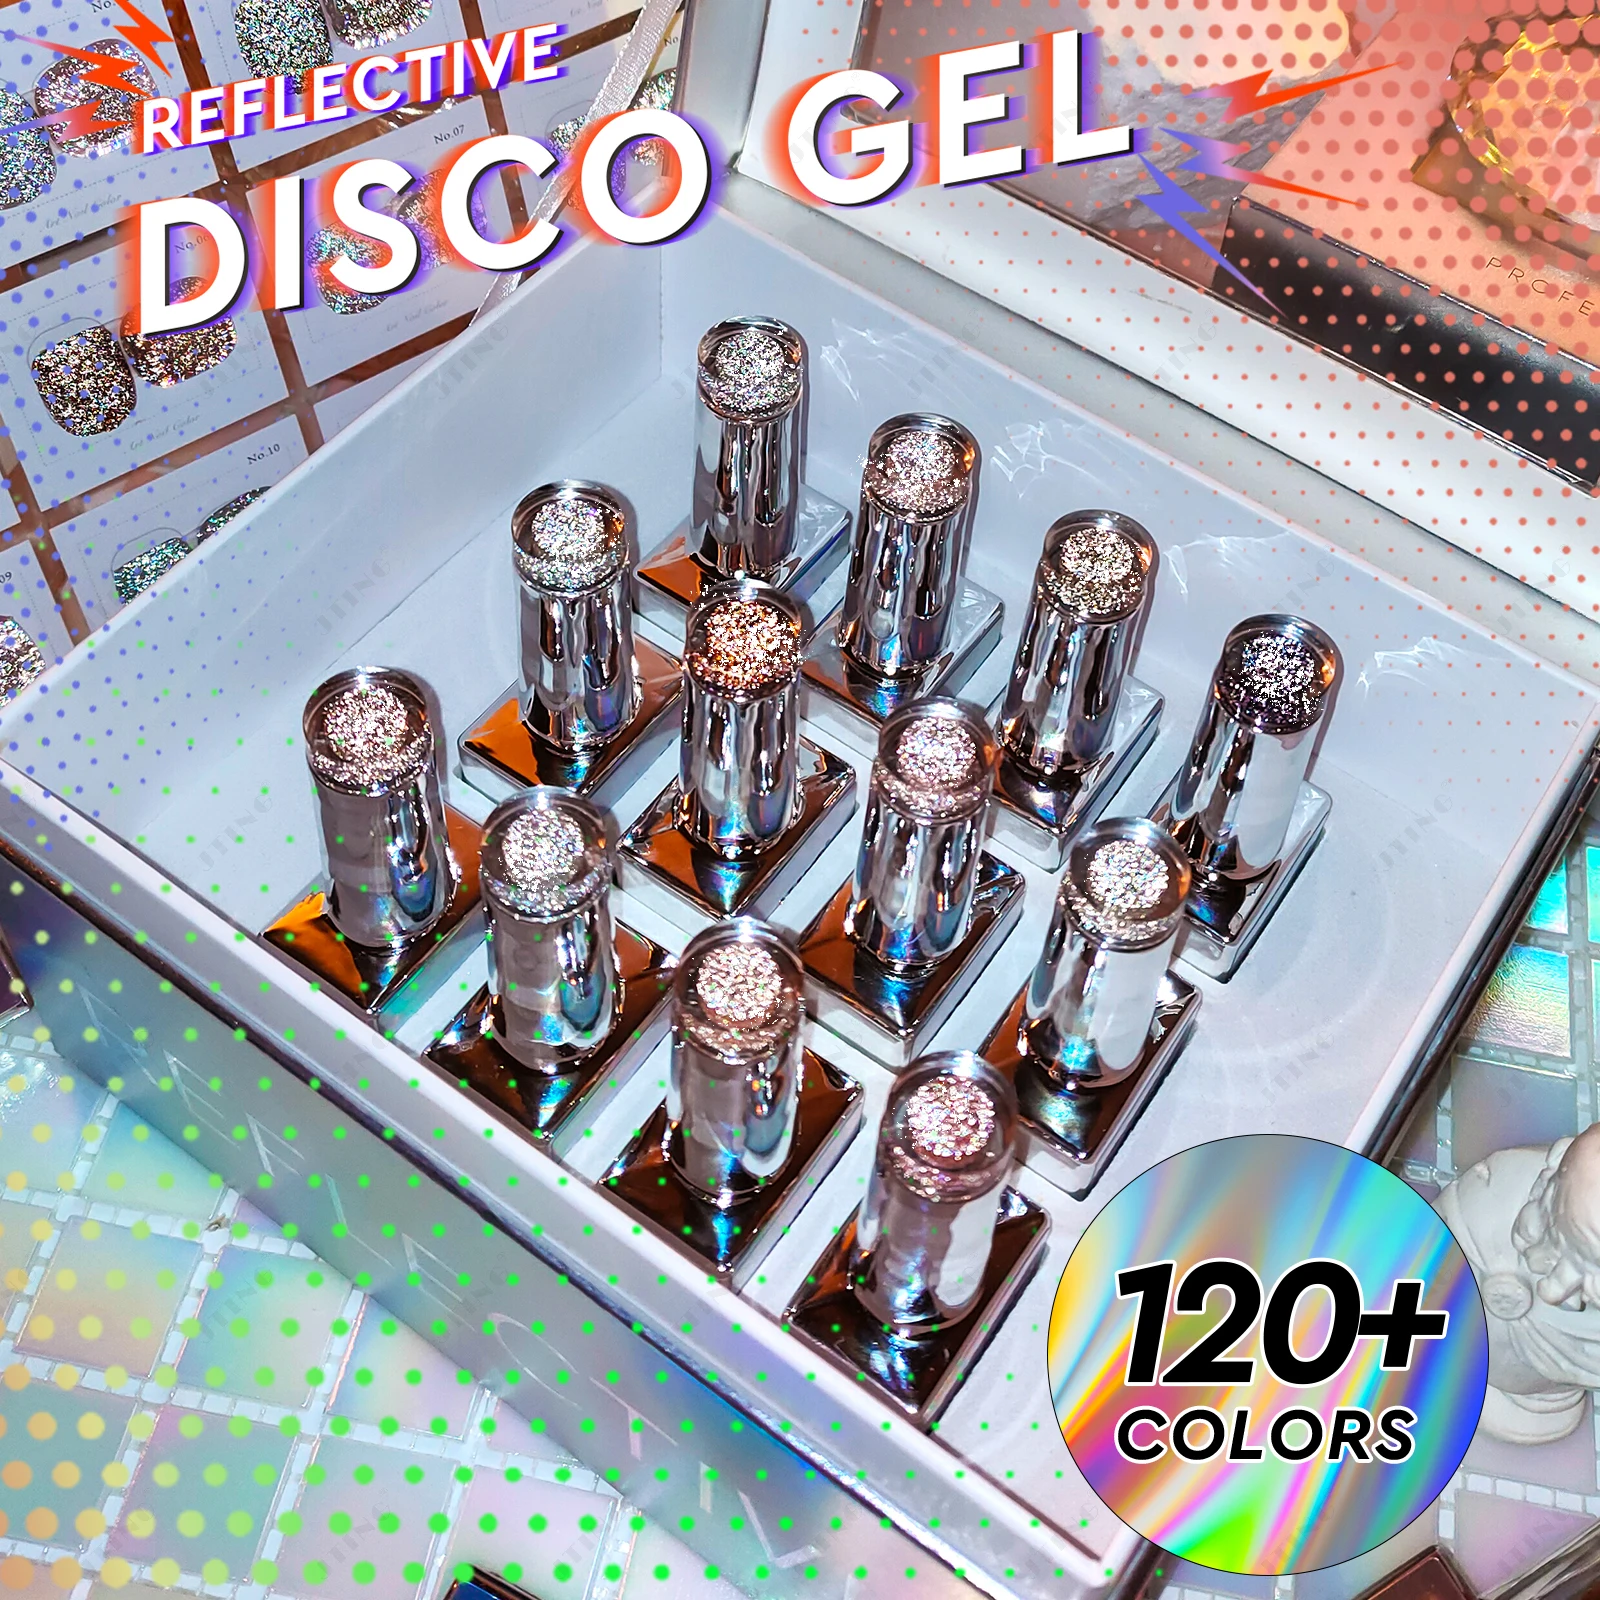 

JTING Super Popular 12colors reflective disco gel polish collection Unique Laser set box OEM gel nail polish supplies